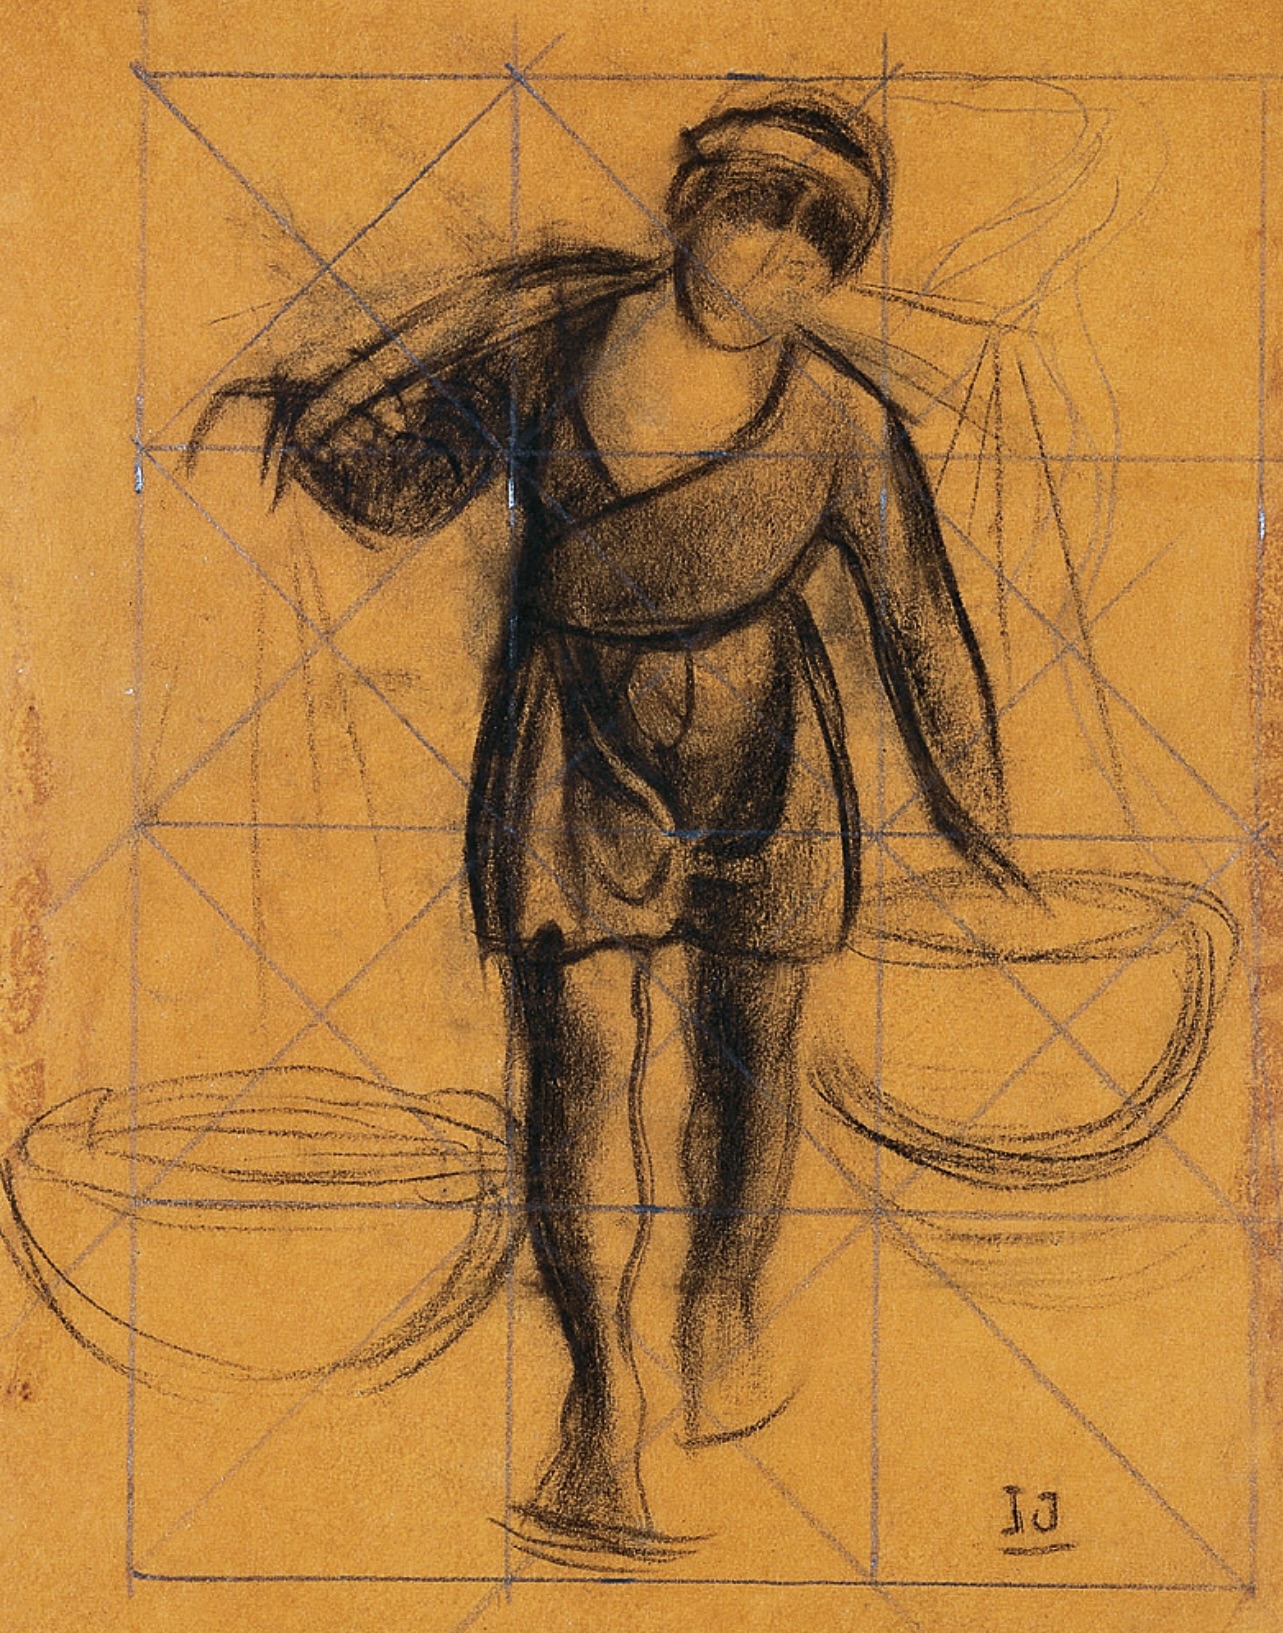 Inguimberty, 1935–38, charcoal on paper, 26 x 20cm